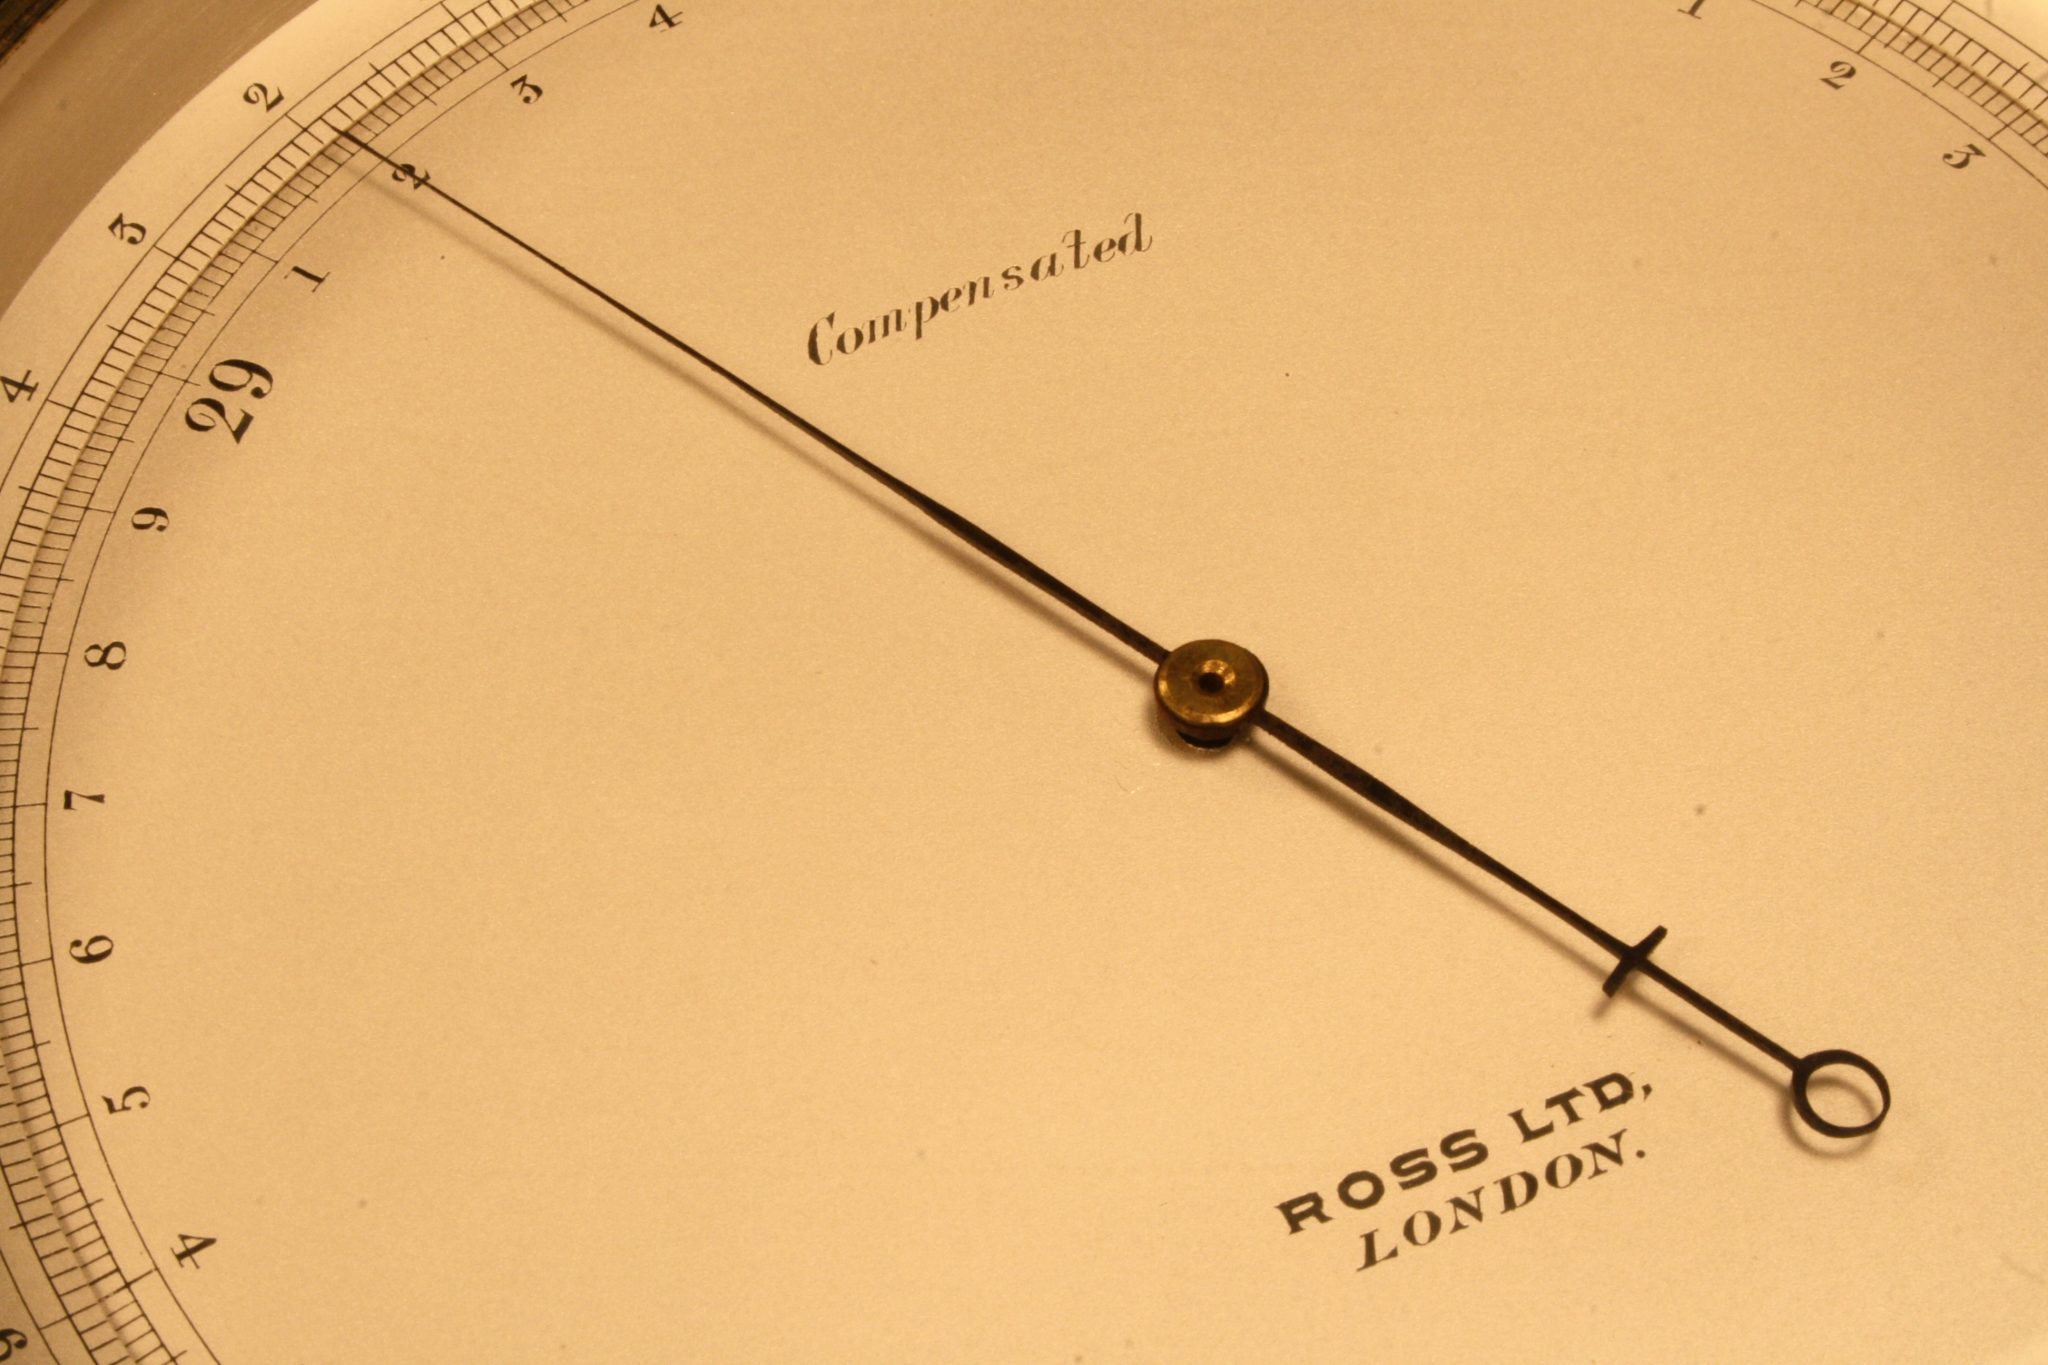 Image of Ross Barometer c1918